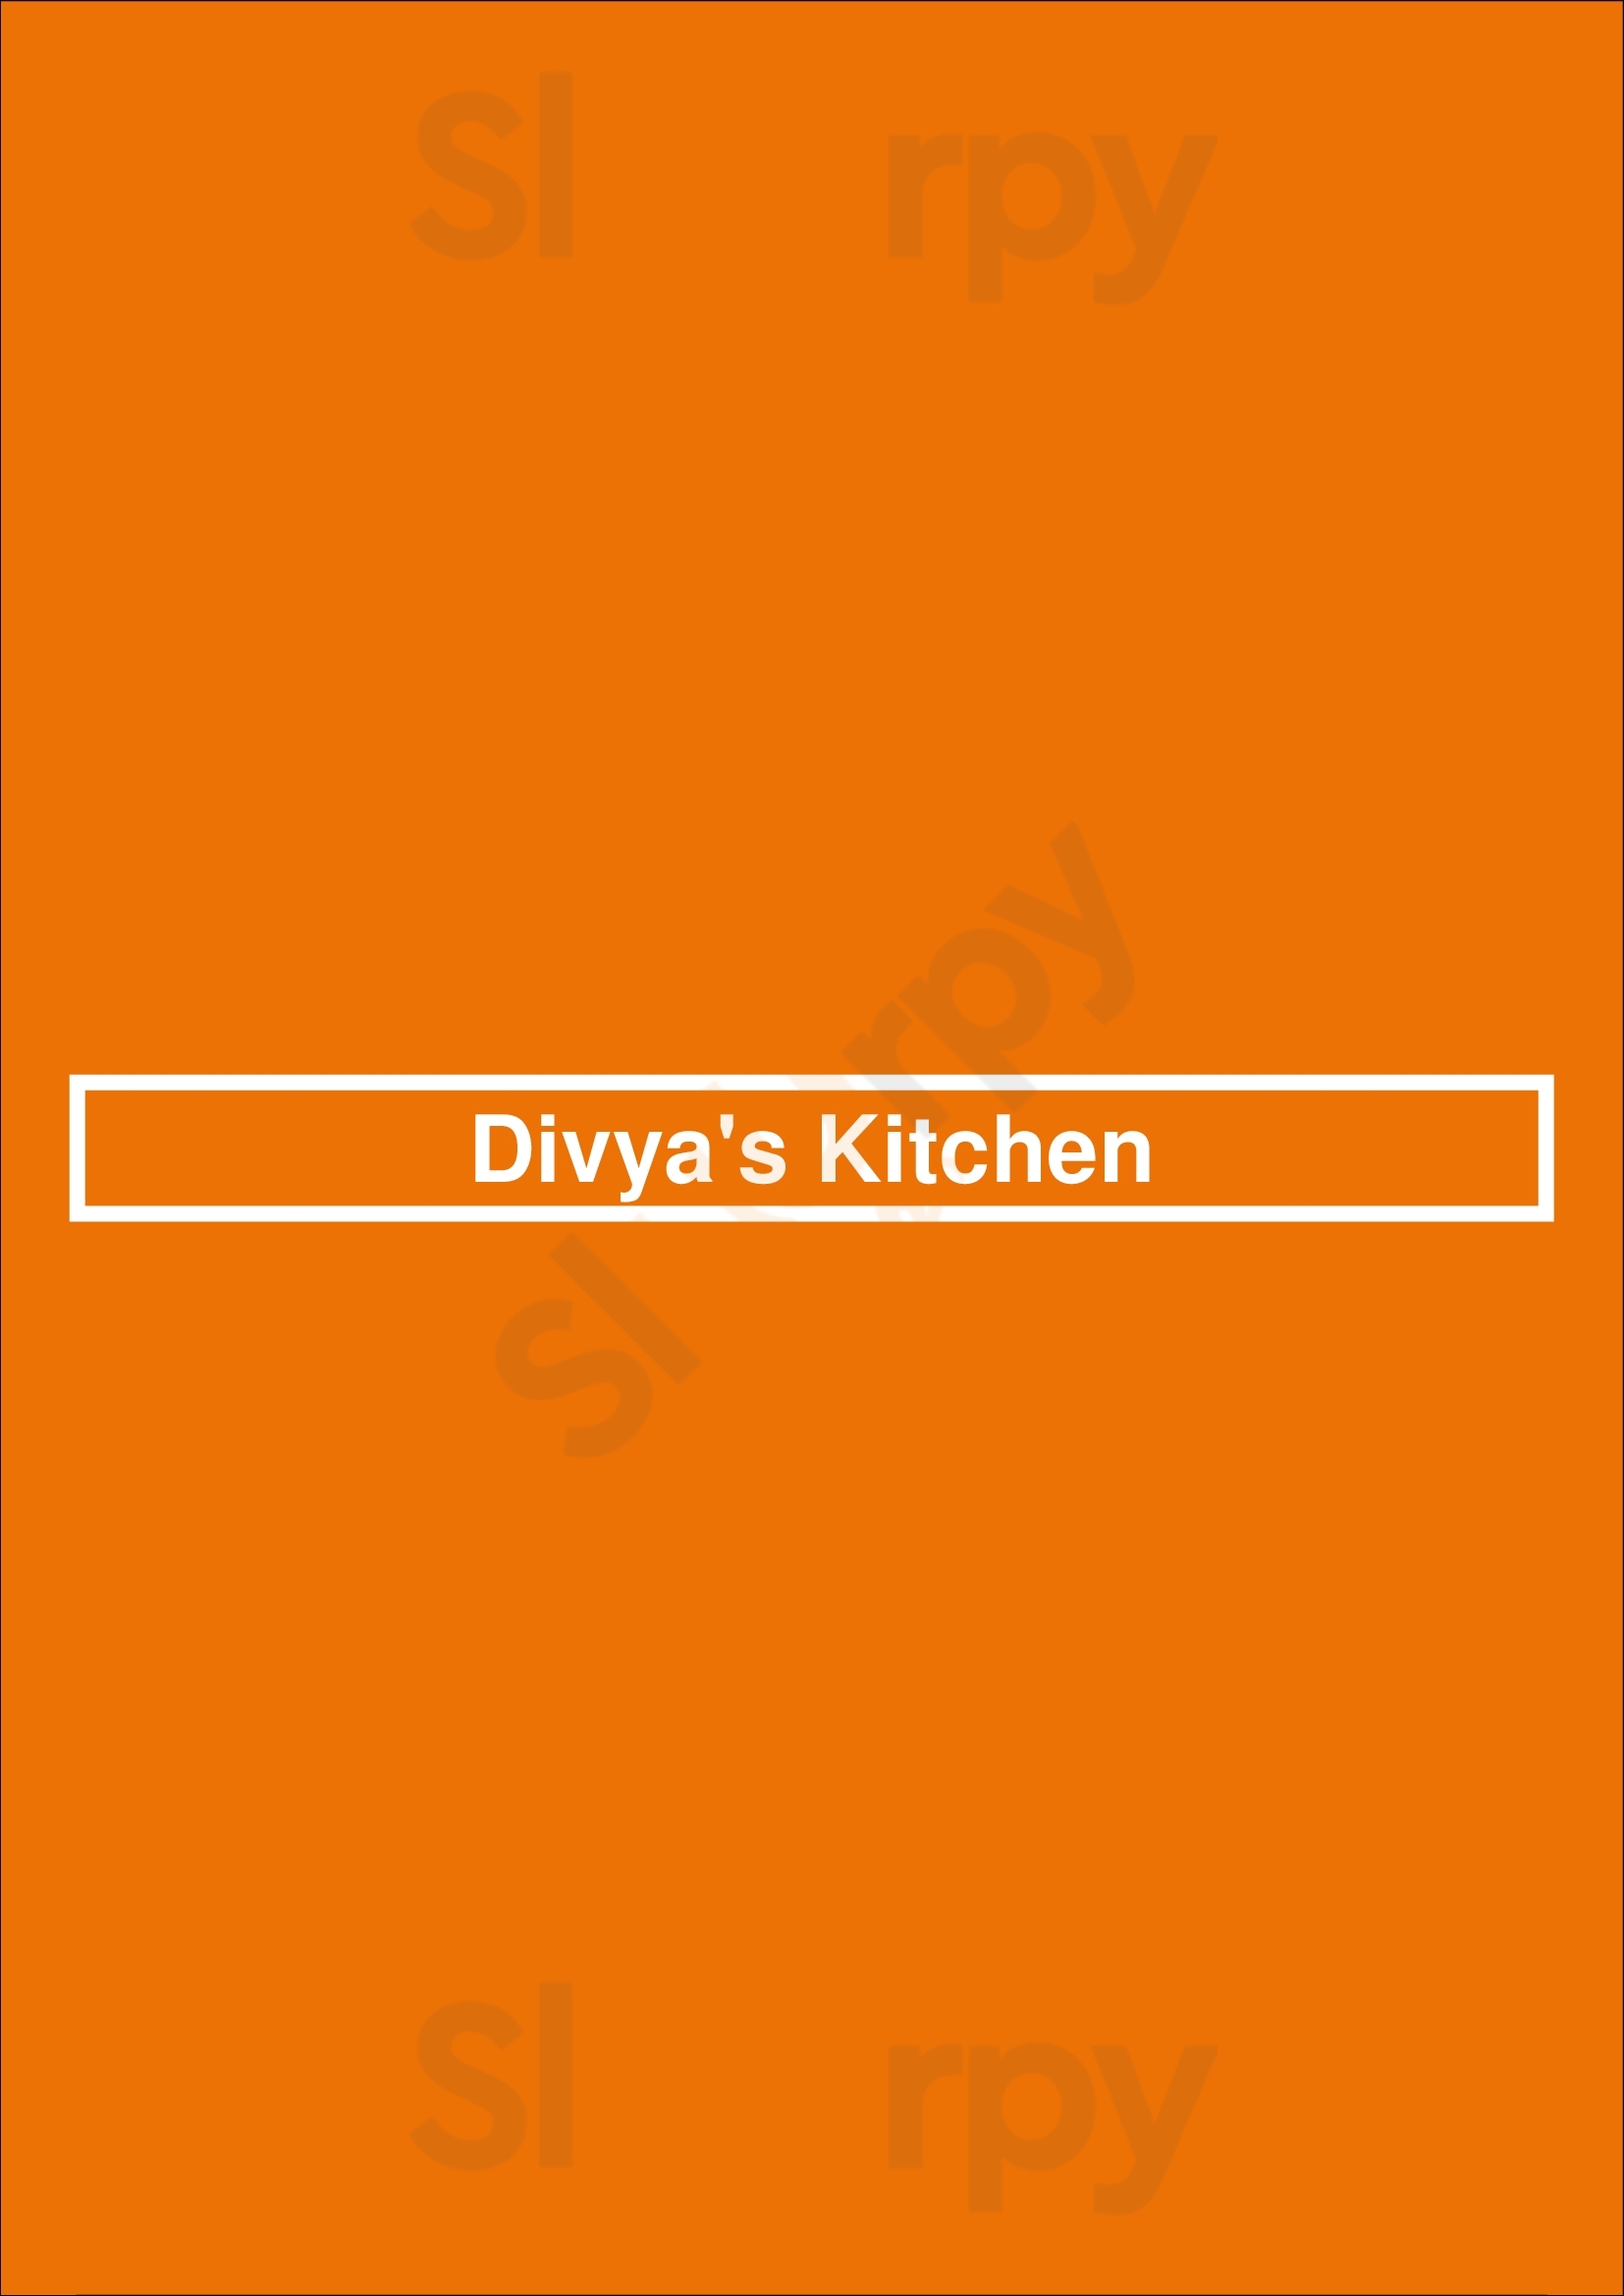 Divya's Kitchen New York City Menu - 1